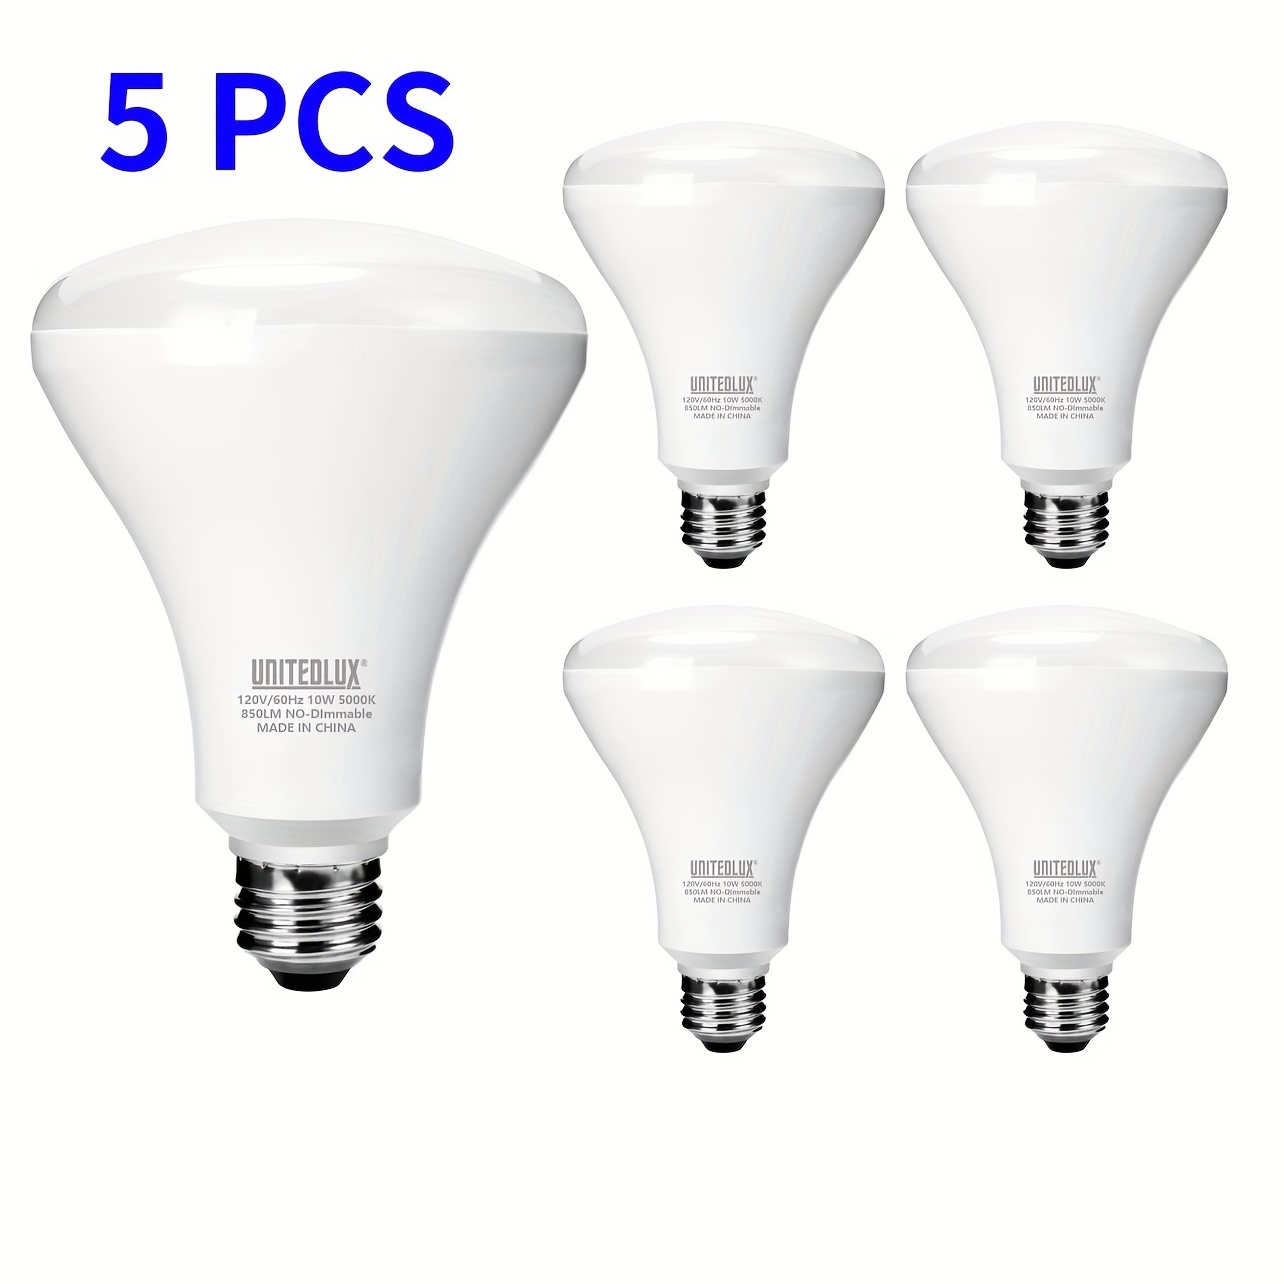 Bombilla LED de 12 V, equivalente a 100 W, luz blanca diurna 5000 K, 13 W  1200 lúmenes, 12 voltios CA/CC, base E26 no regulable, bombillas de bajo